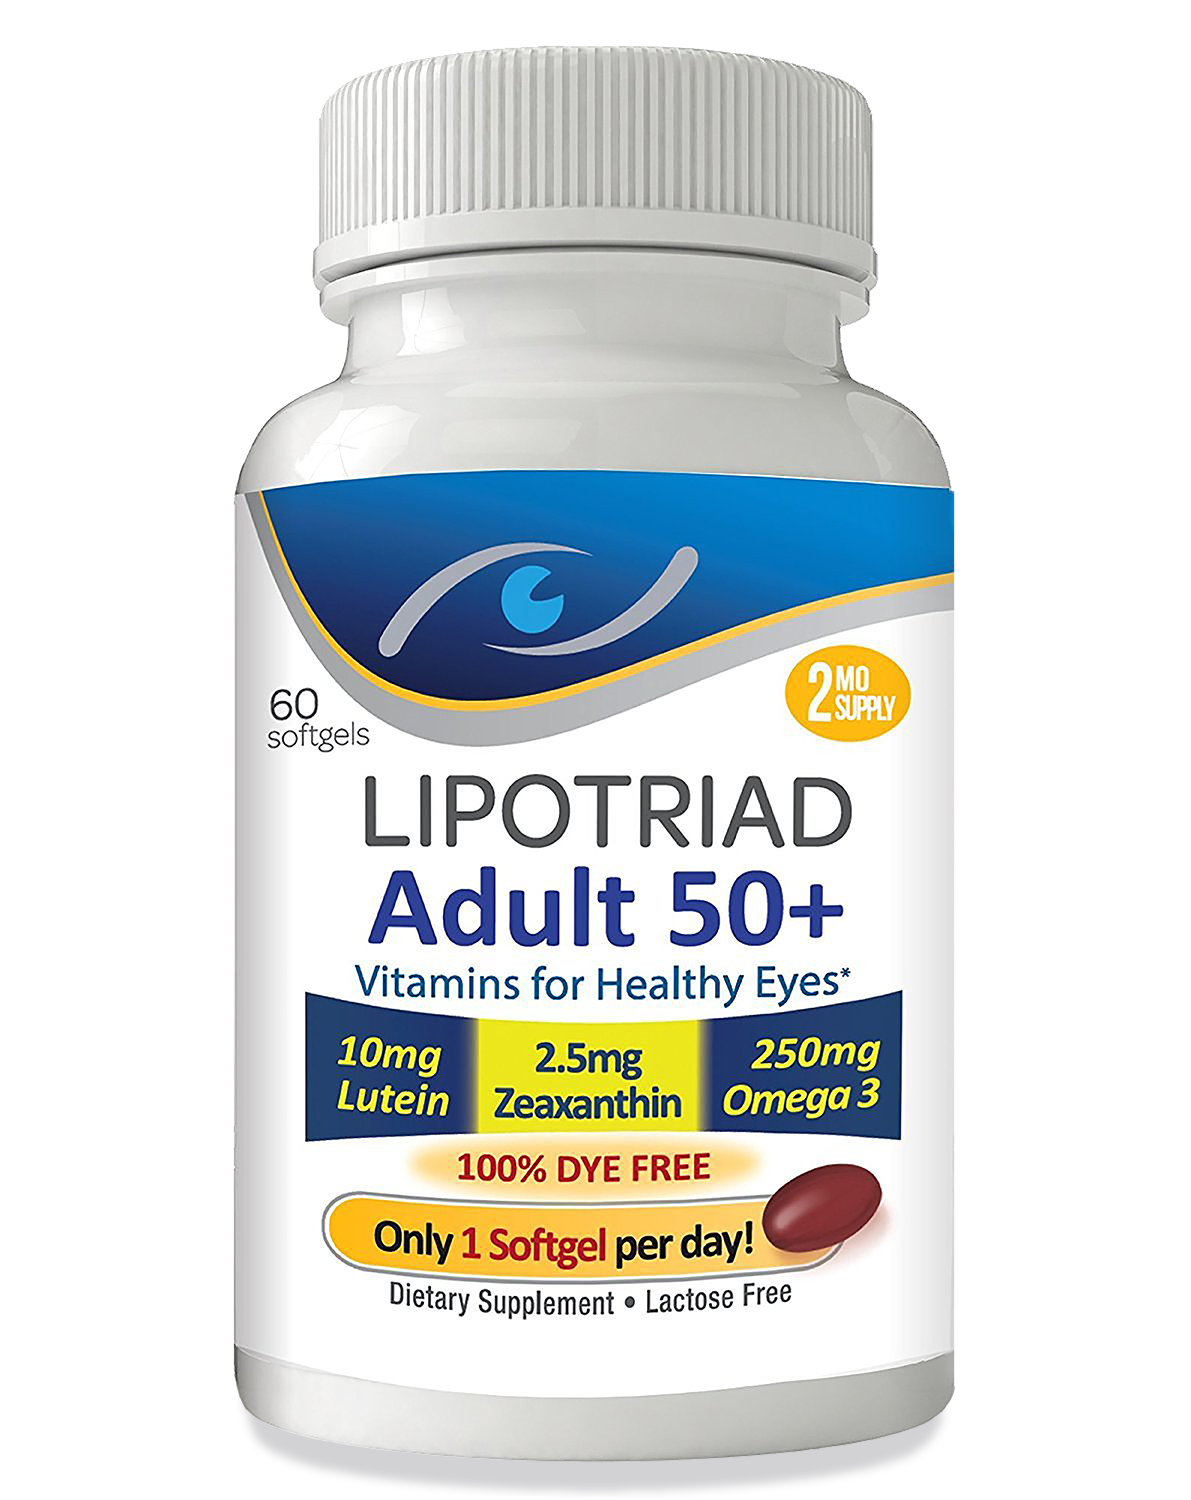 Lipotriad Adult 50+